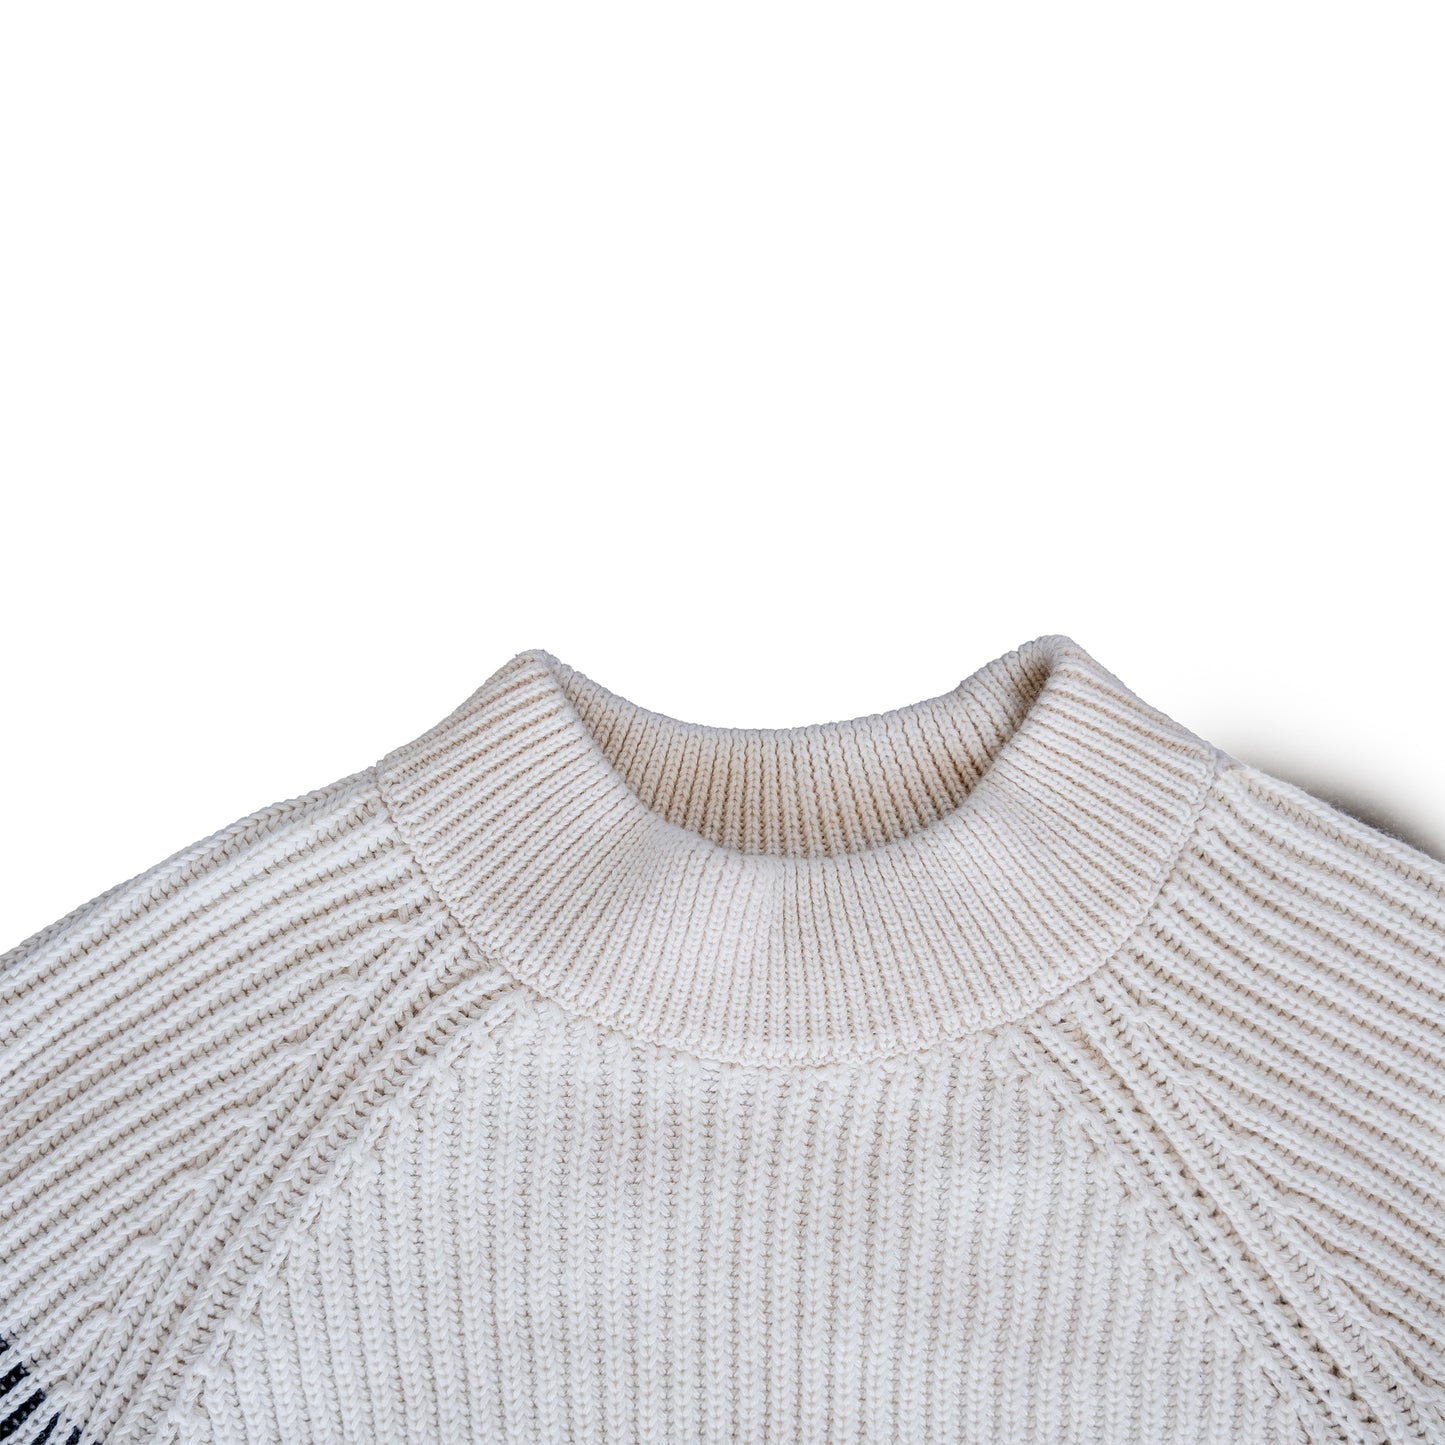 Women’s Canyon Sweater - Natural / Grey / Black